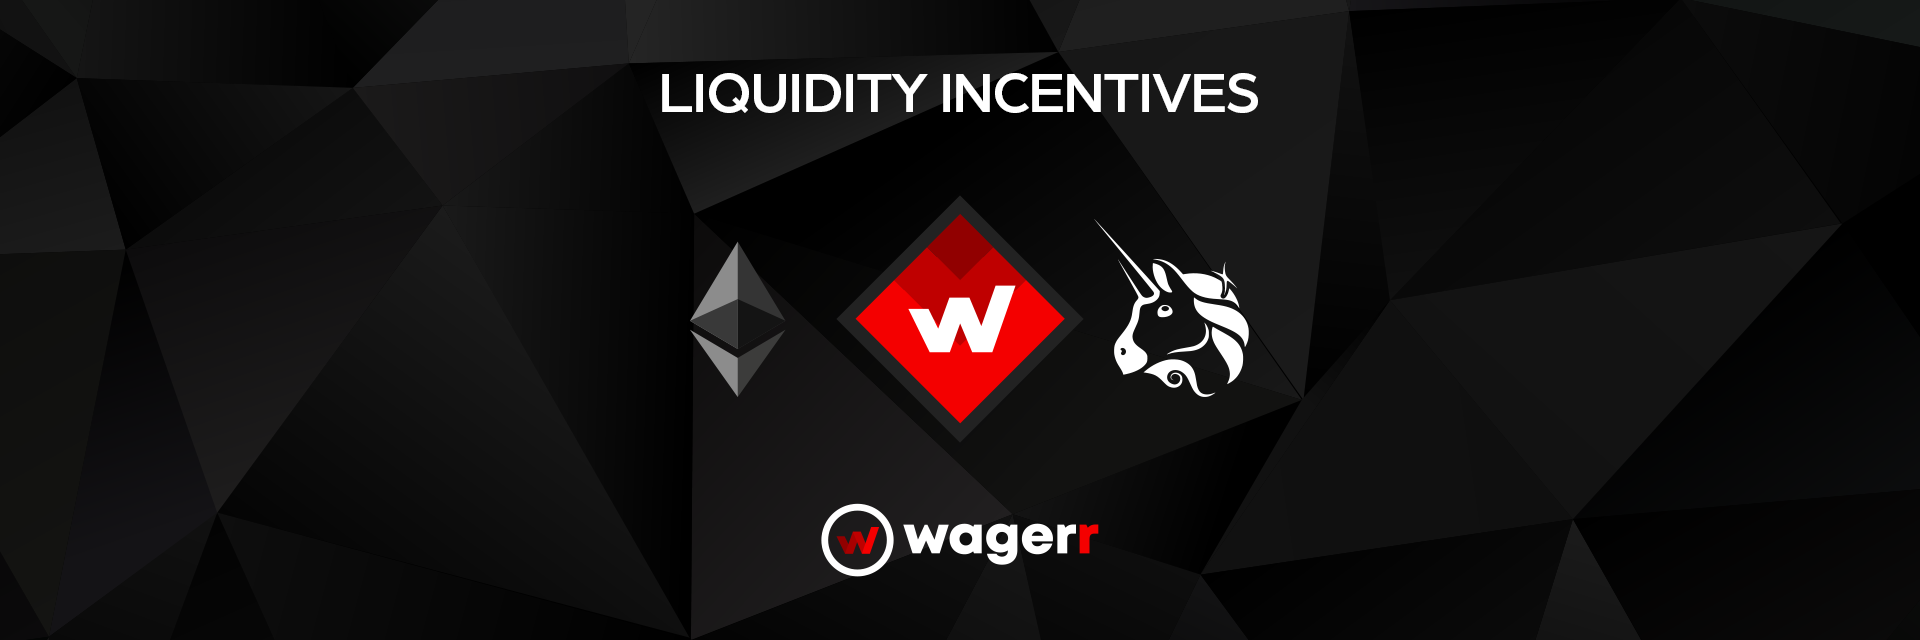 WWGR Liquidity Incentives!